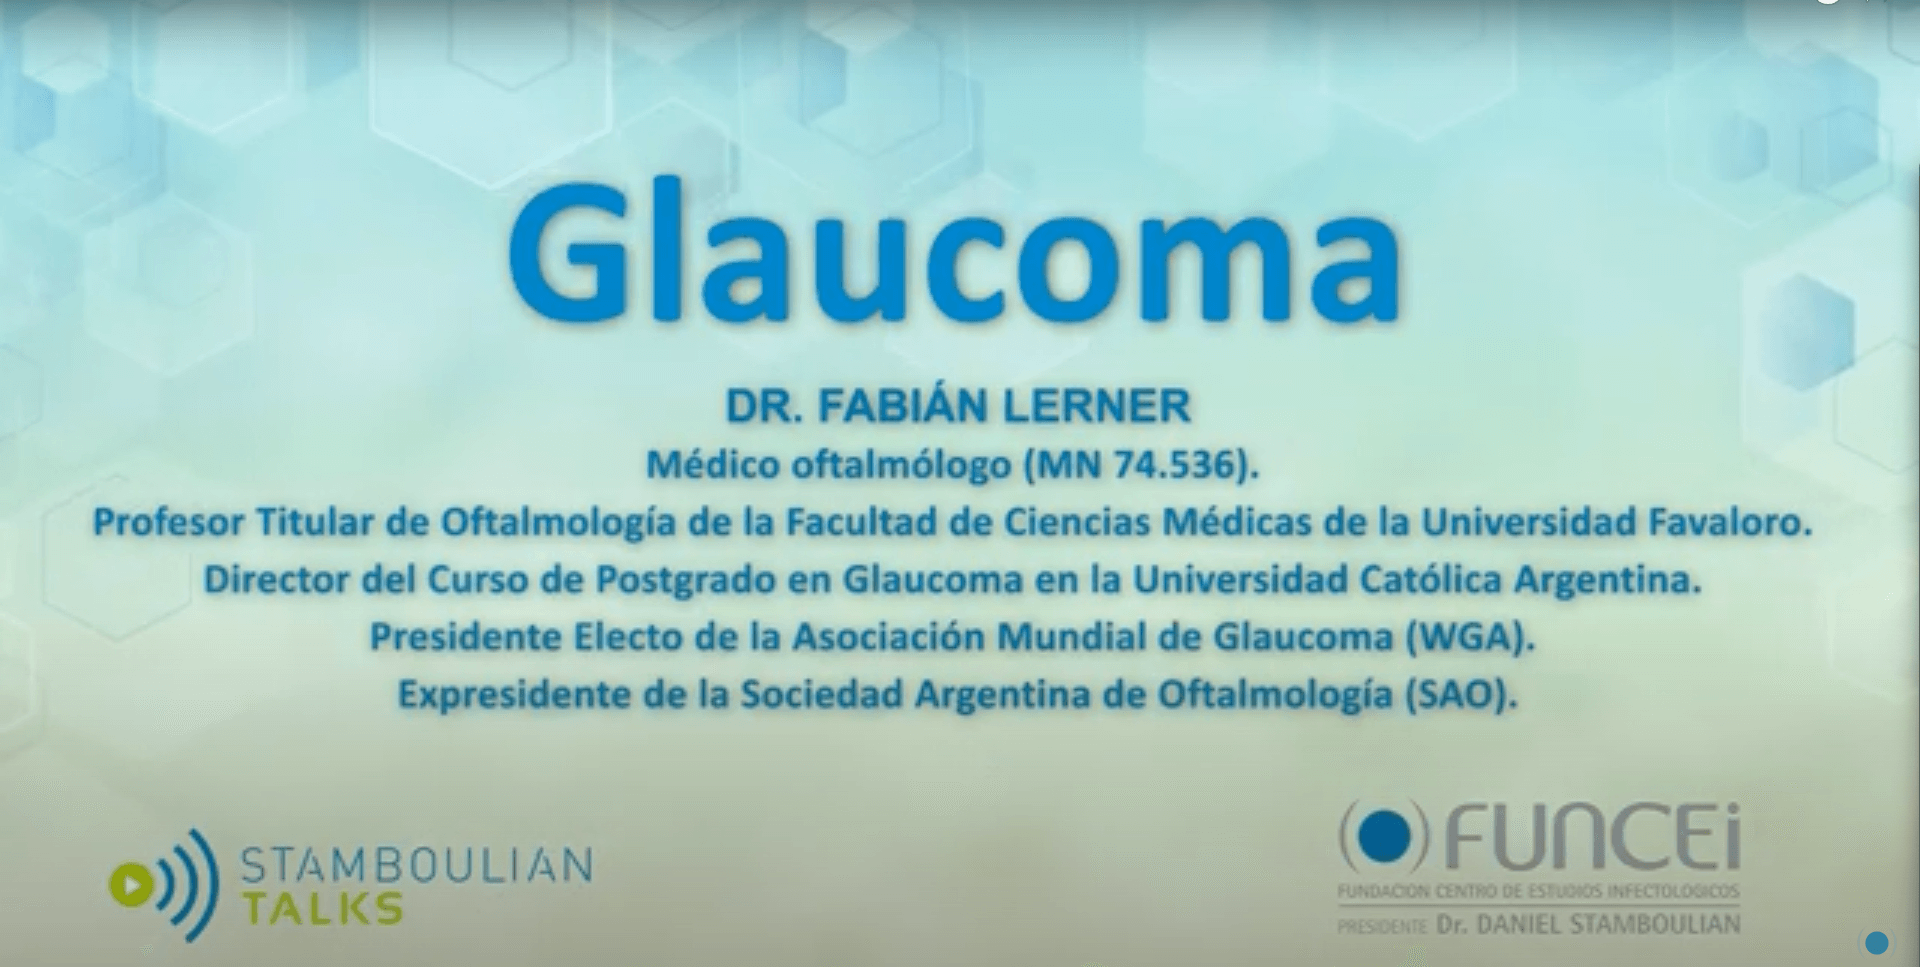 #StamboulianTalks - Glaucoma